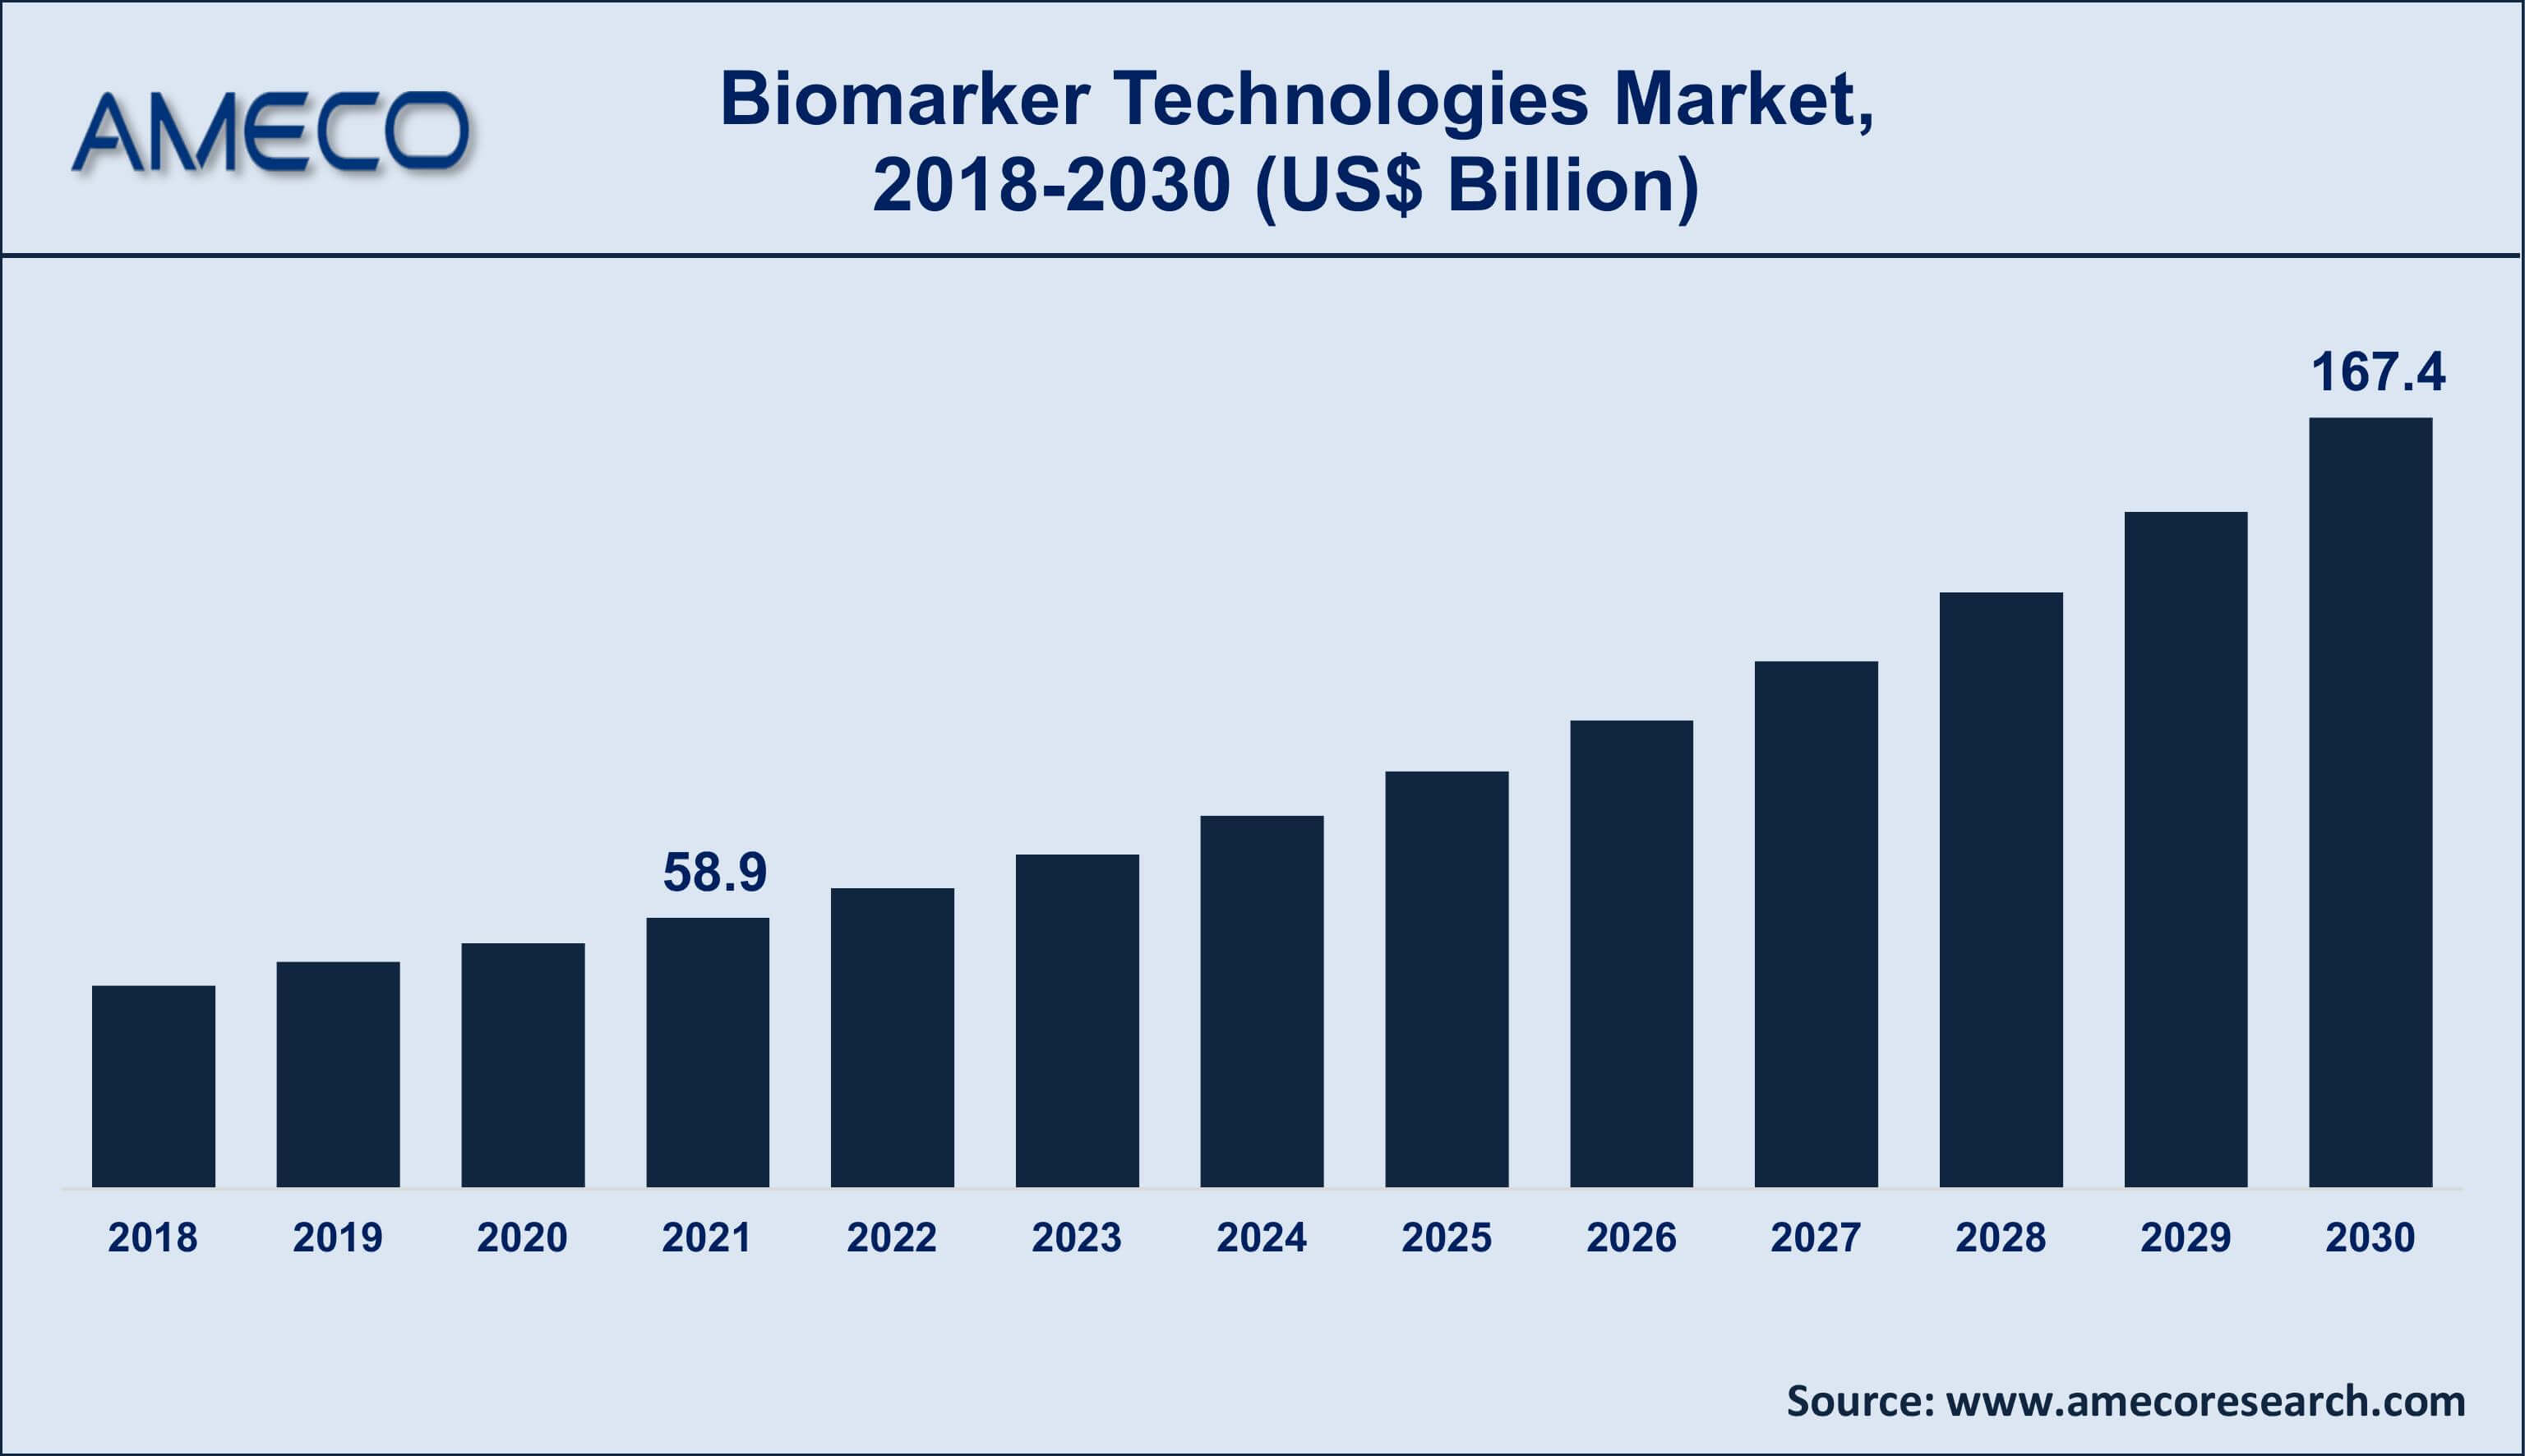 Biomarker Technologies Market Dynamics